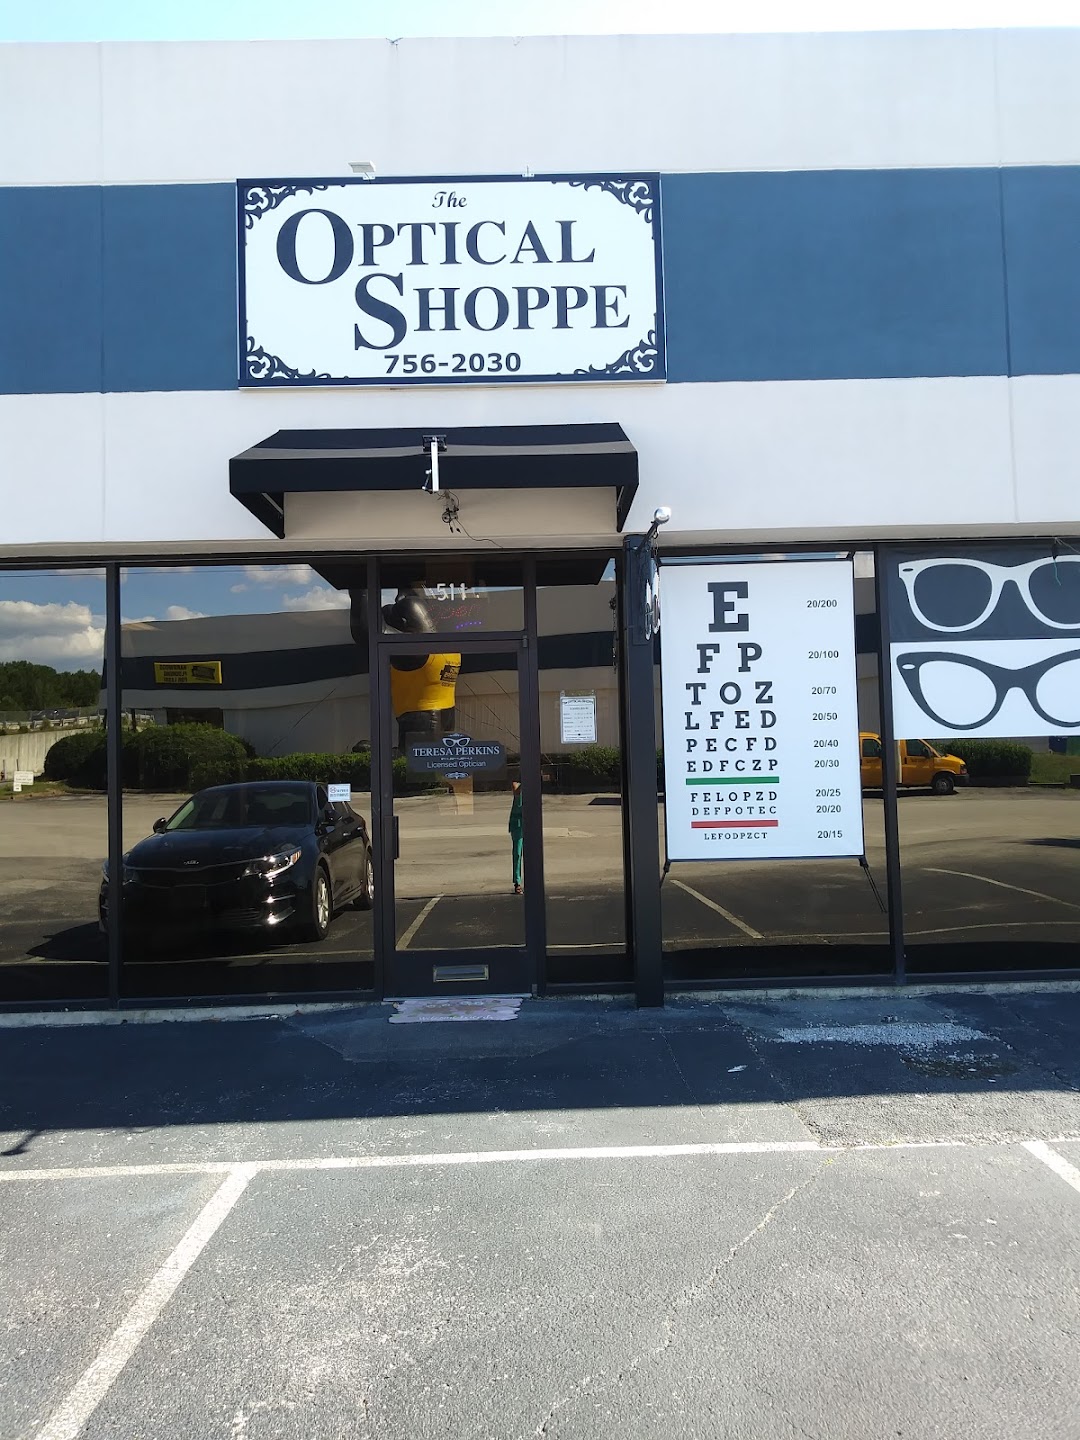 The OPTICAL SHOPPE - TERESA PERKINS, Licensed Optician